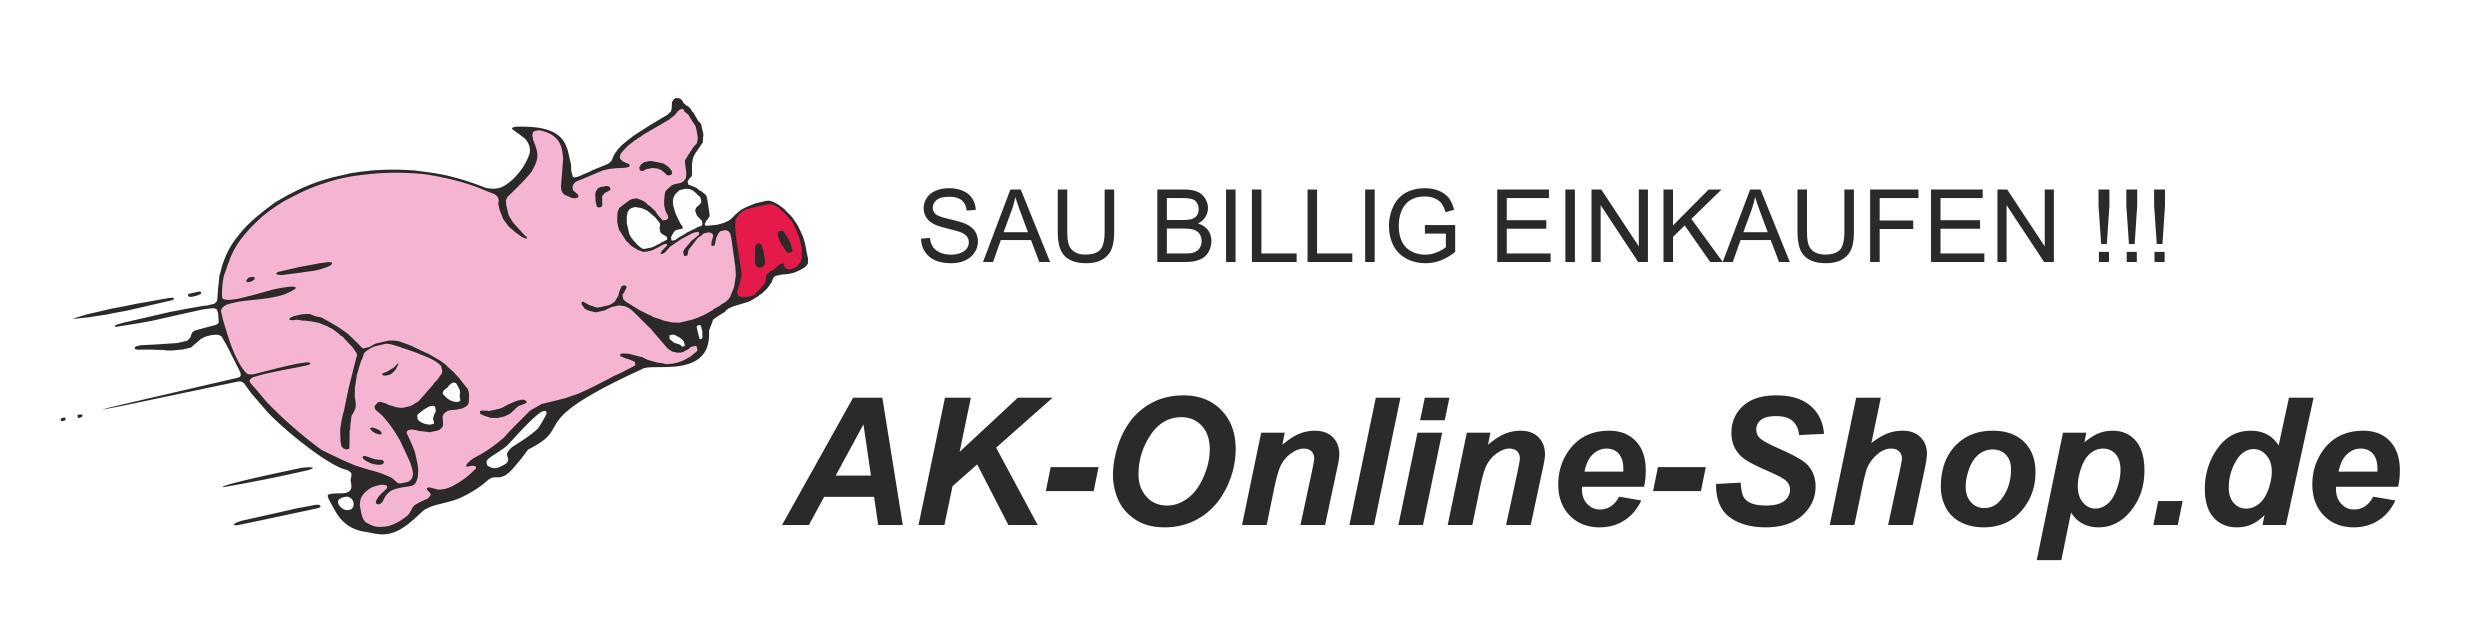 AK-Online-Shop.de